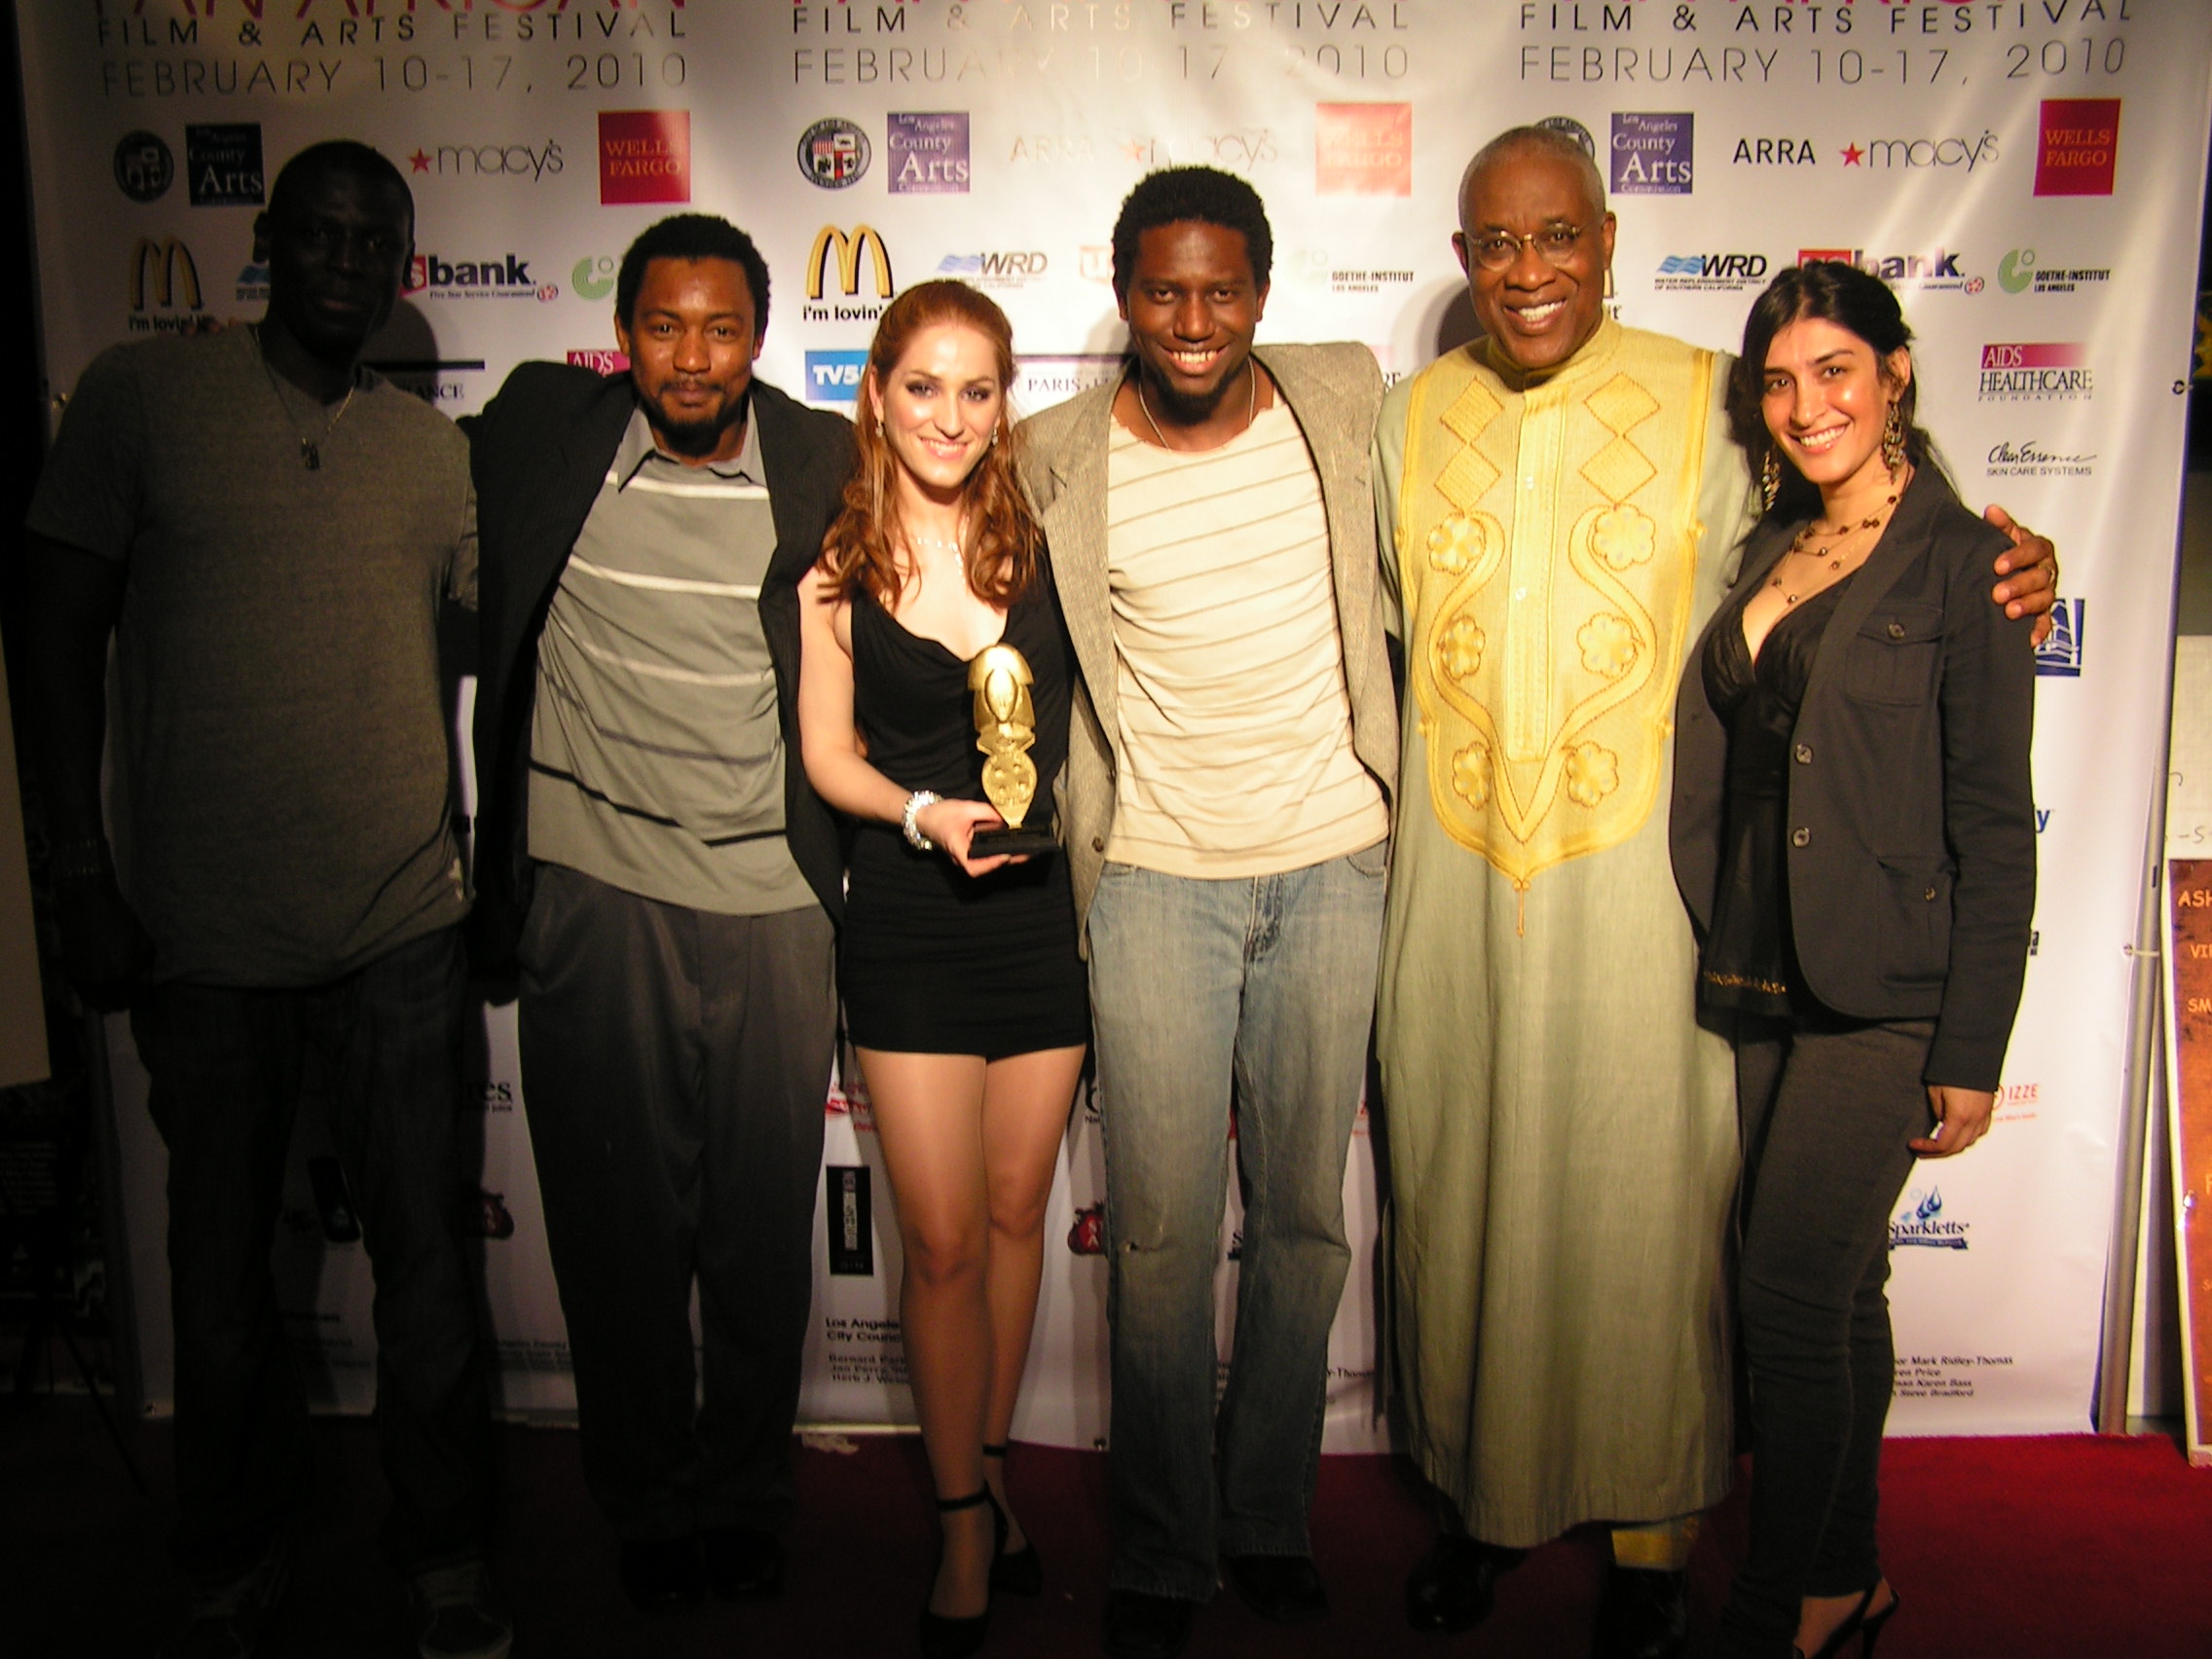 Pan African Film Festival 2010 red carpet